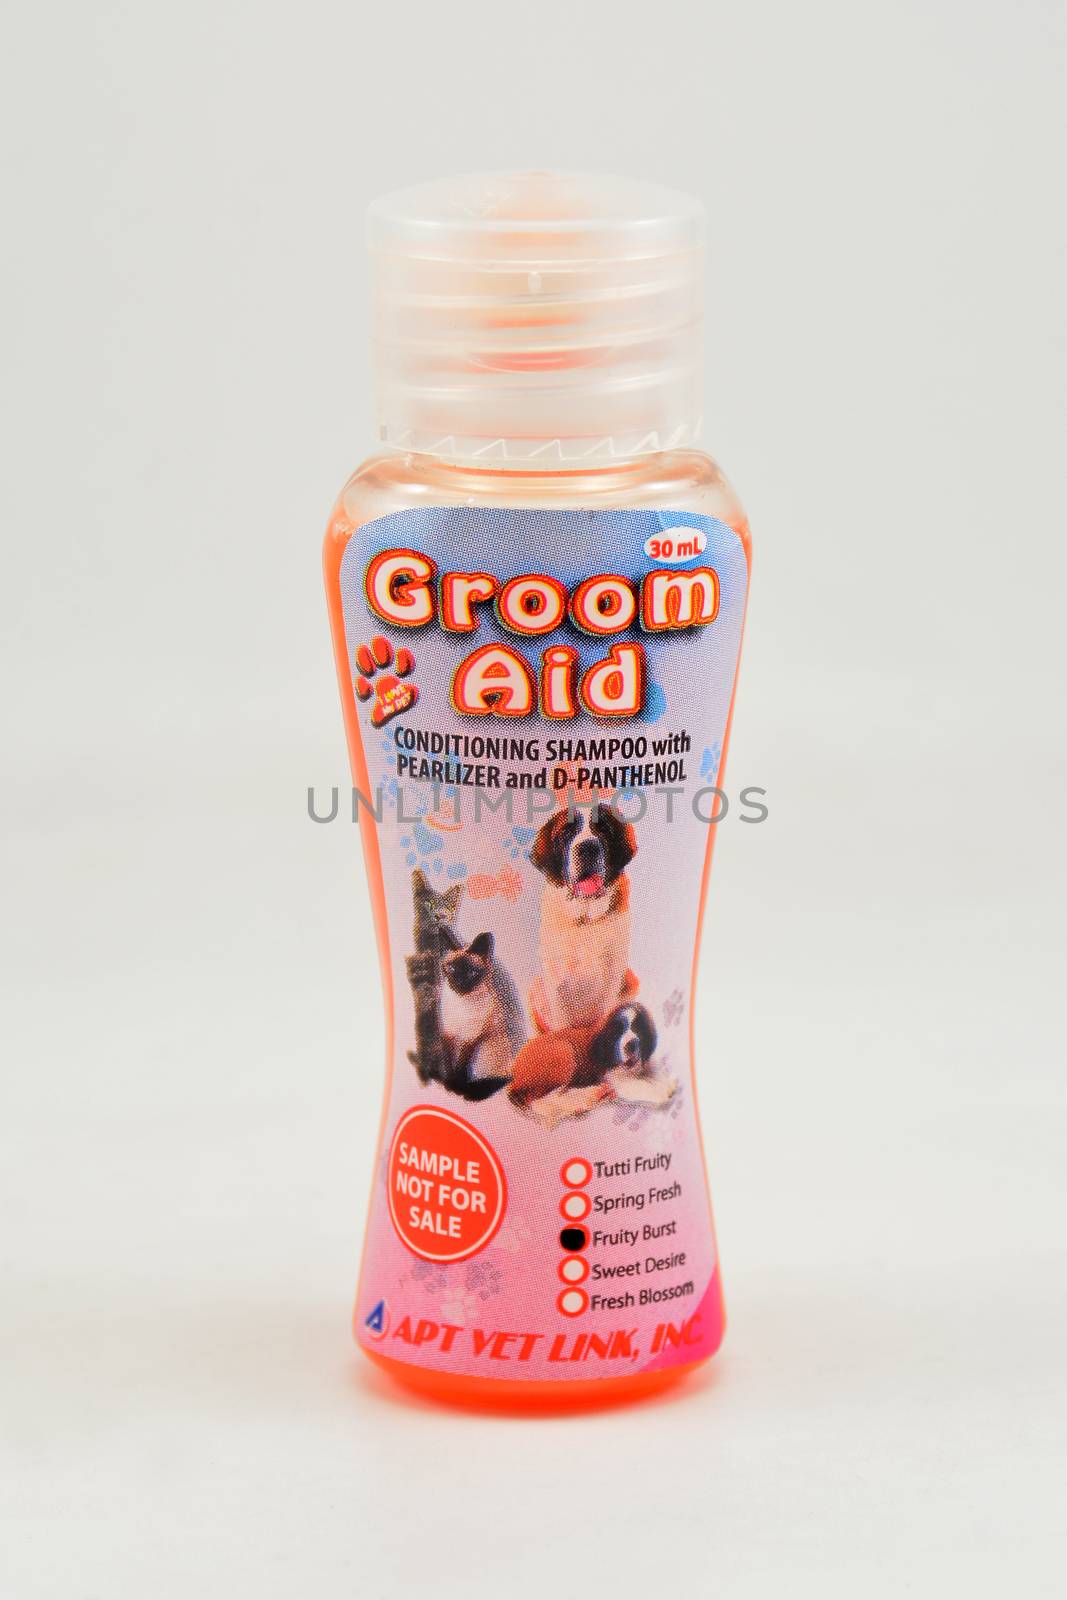 MANILA, PH - SEPT 10 - Groom aid dog conditioning shampoo on September 10, 2020 in Manila, Philippines.